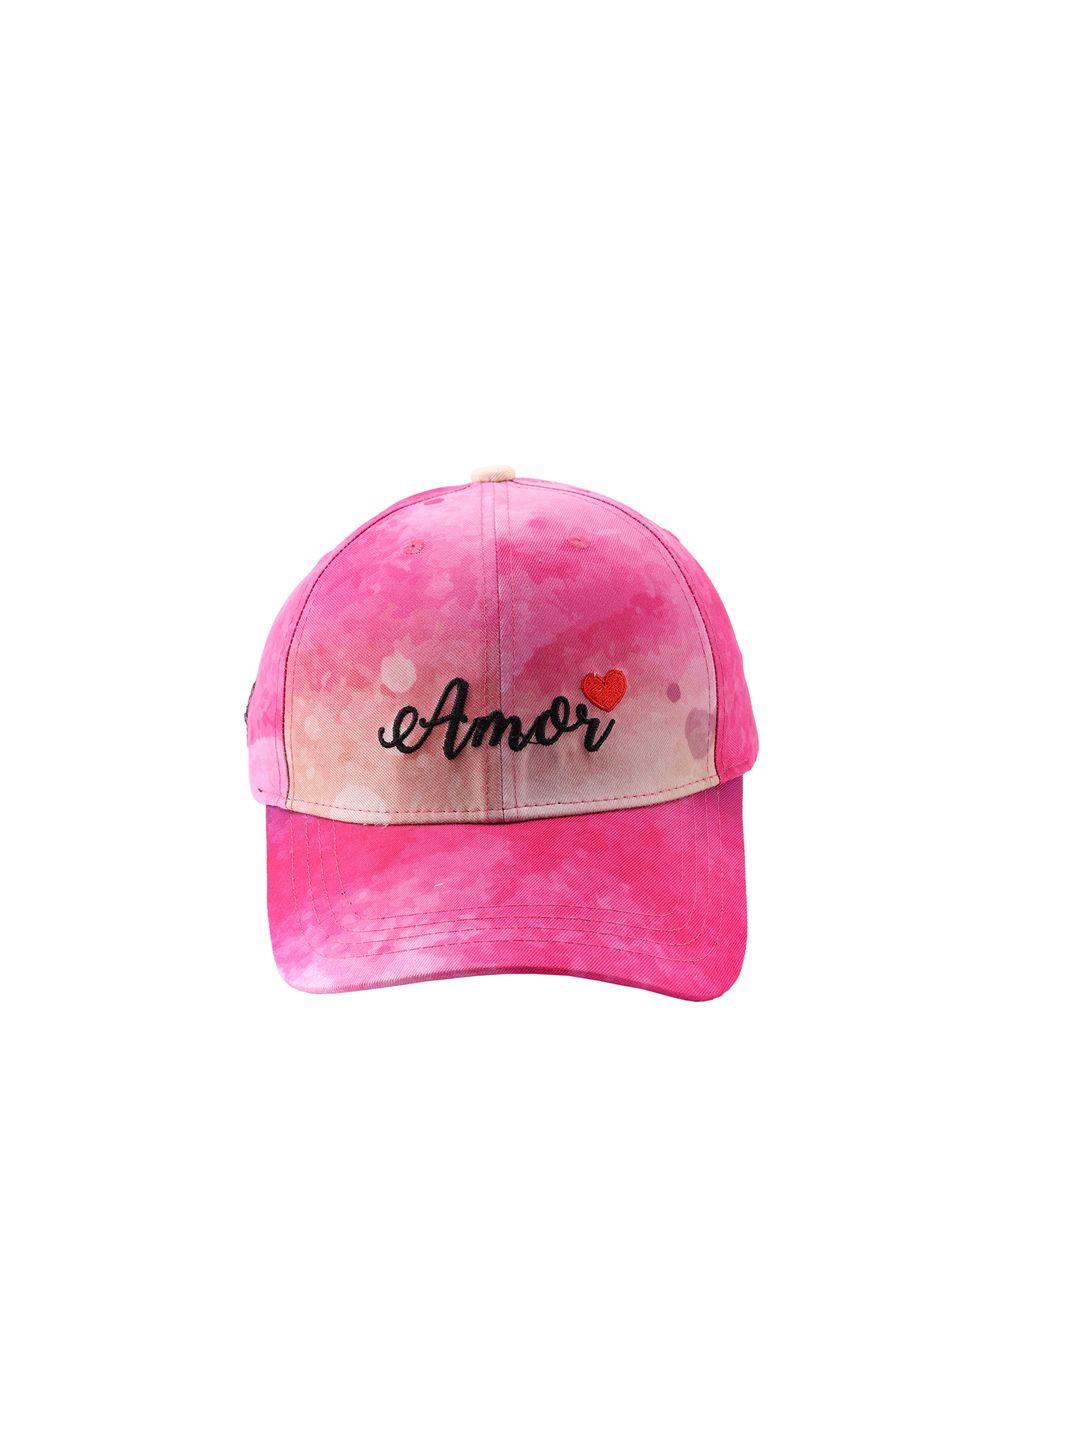 cap shap unisex pink embroidered baseball cap